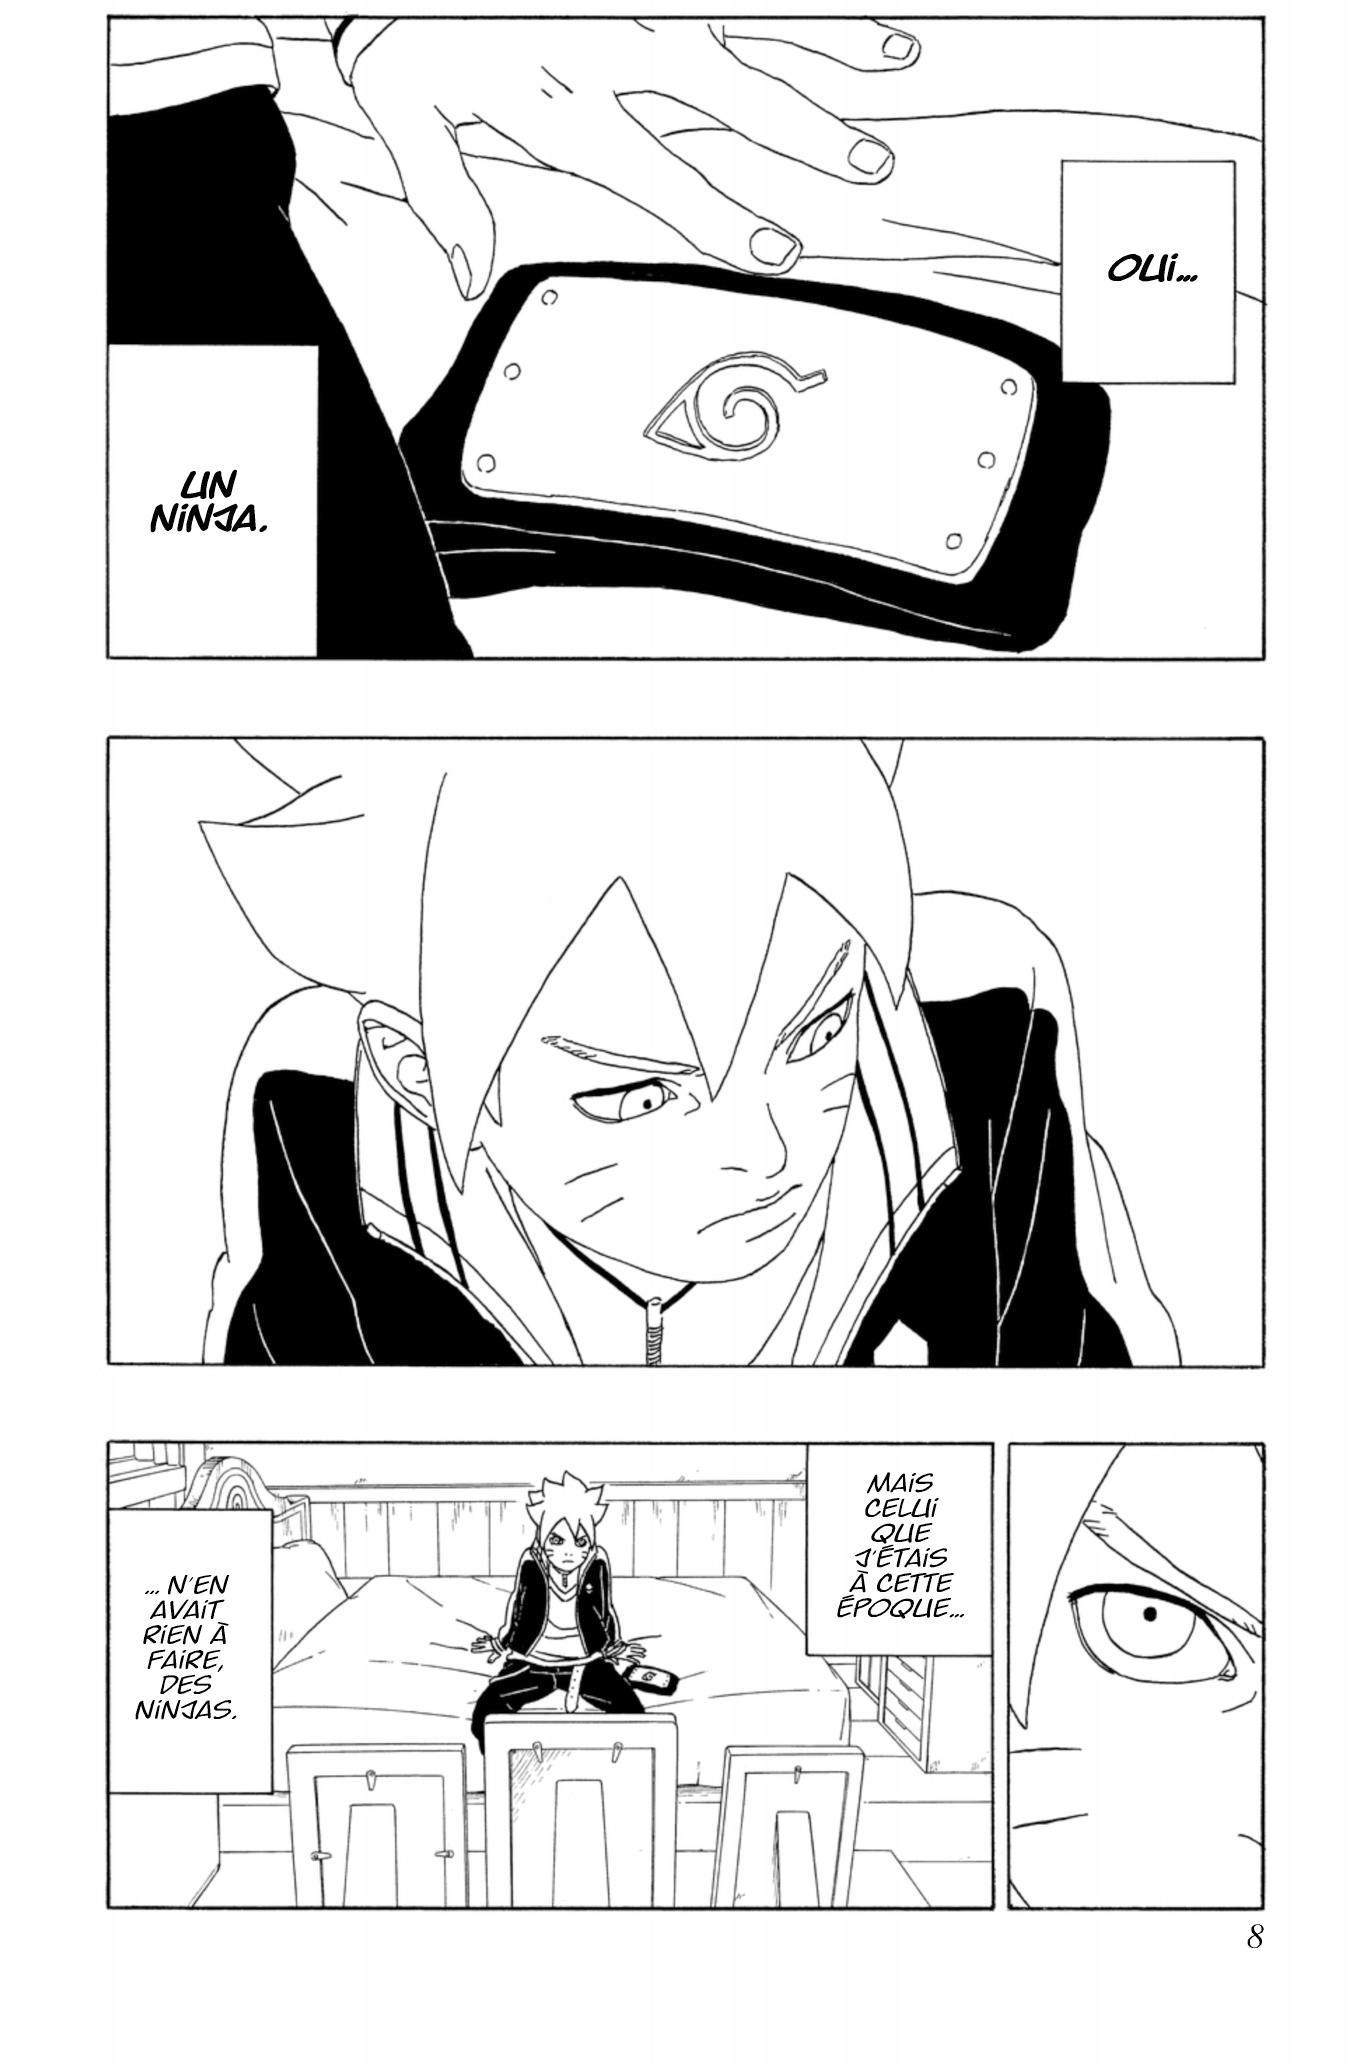 Boruto - Naruto next generations Vol.1